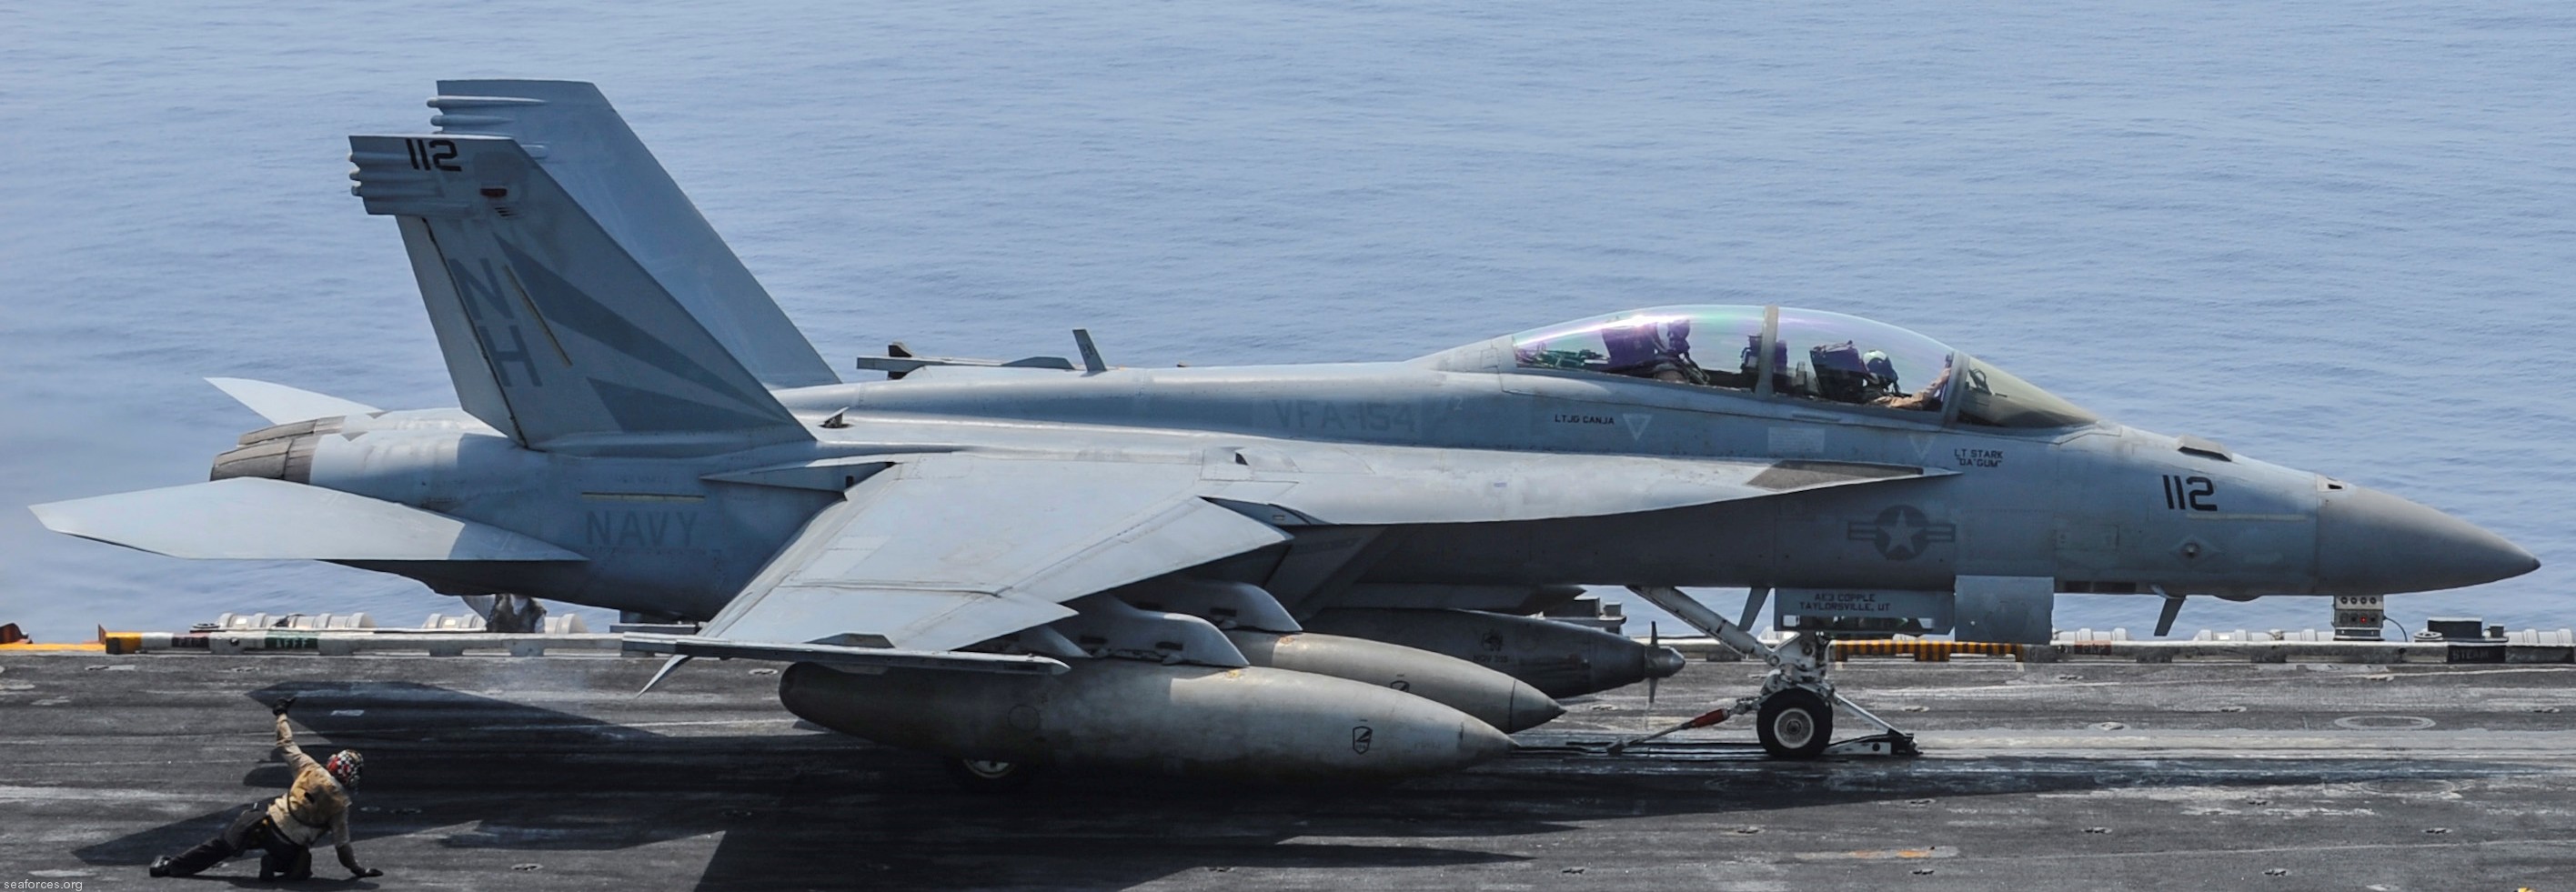 vfa-154 black knights strike fighter squadron navy f/a-18f super hornet carrier air wing cvw-11 uss nimitz cvn-68 34